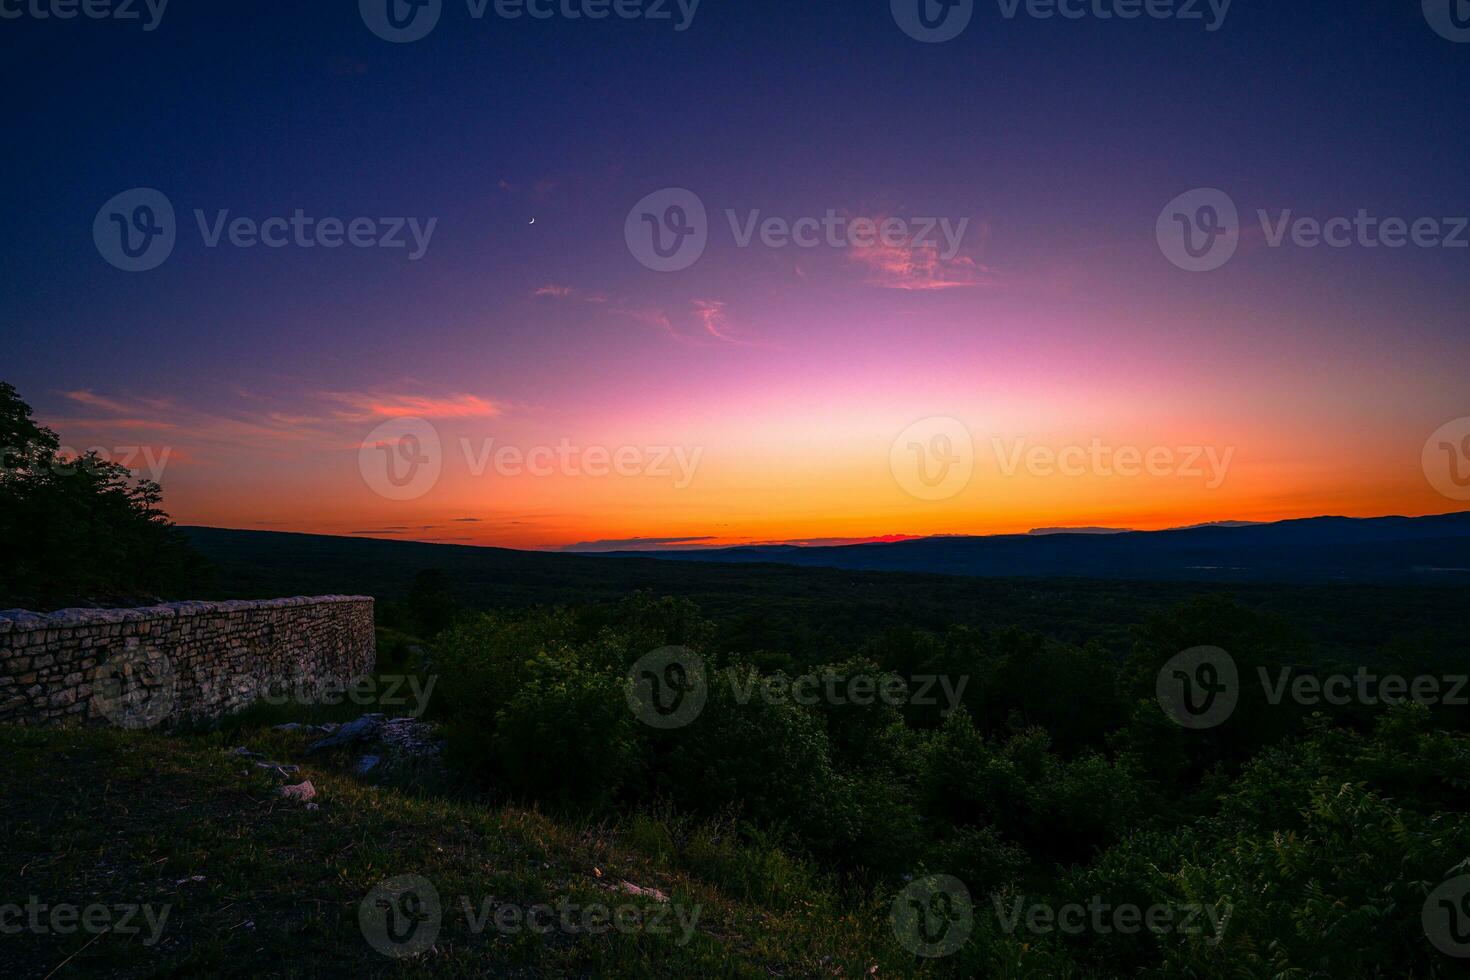 appalachian tramonto Visualizza foto